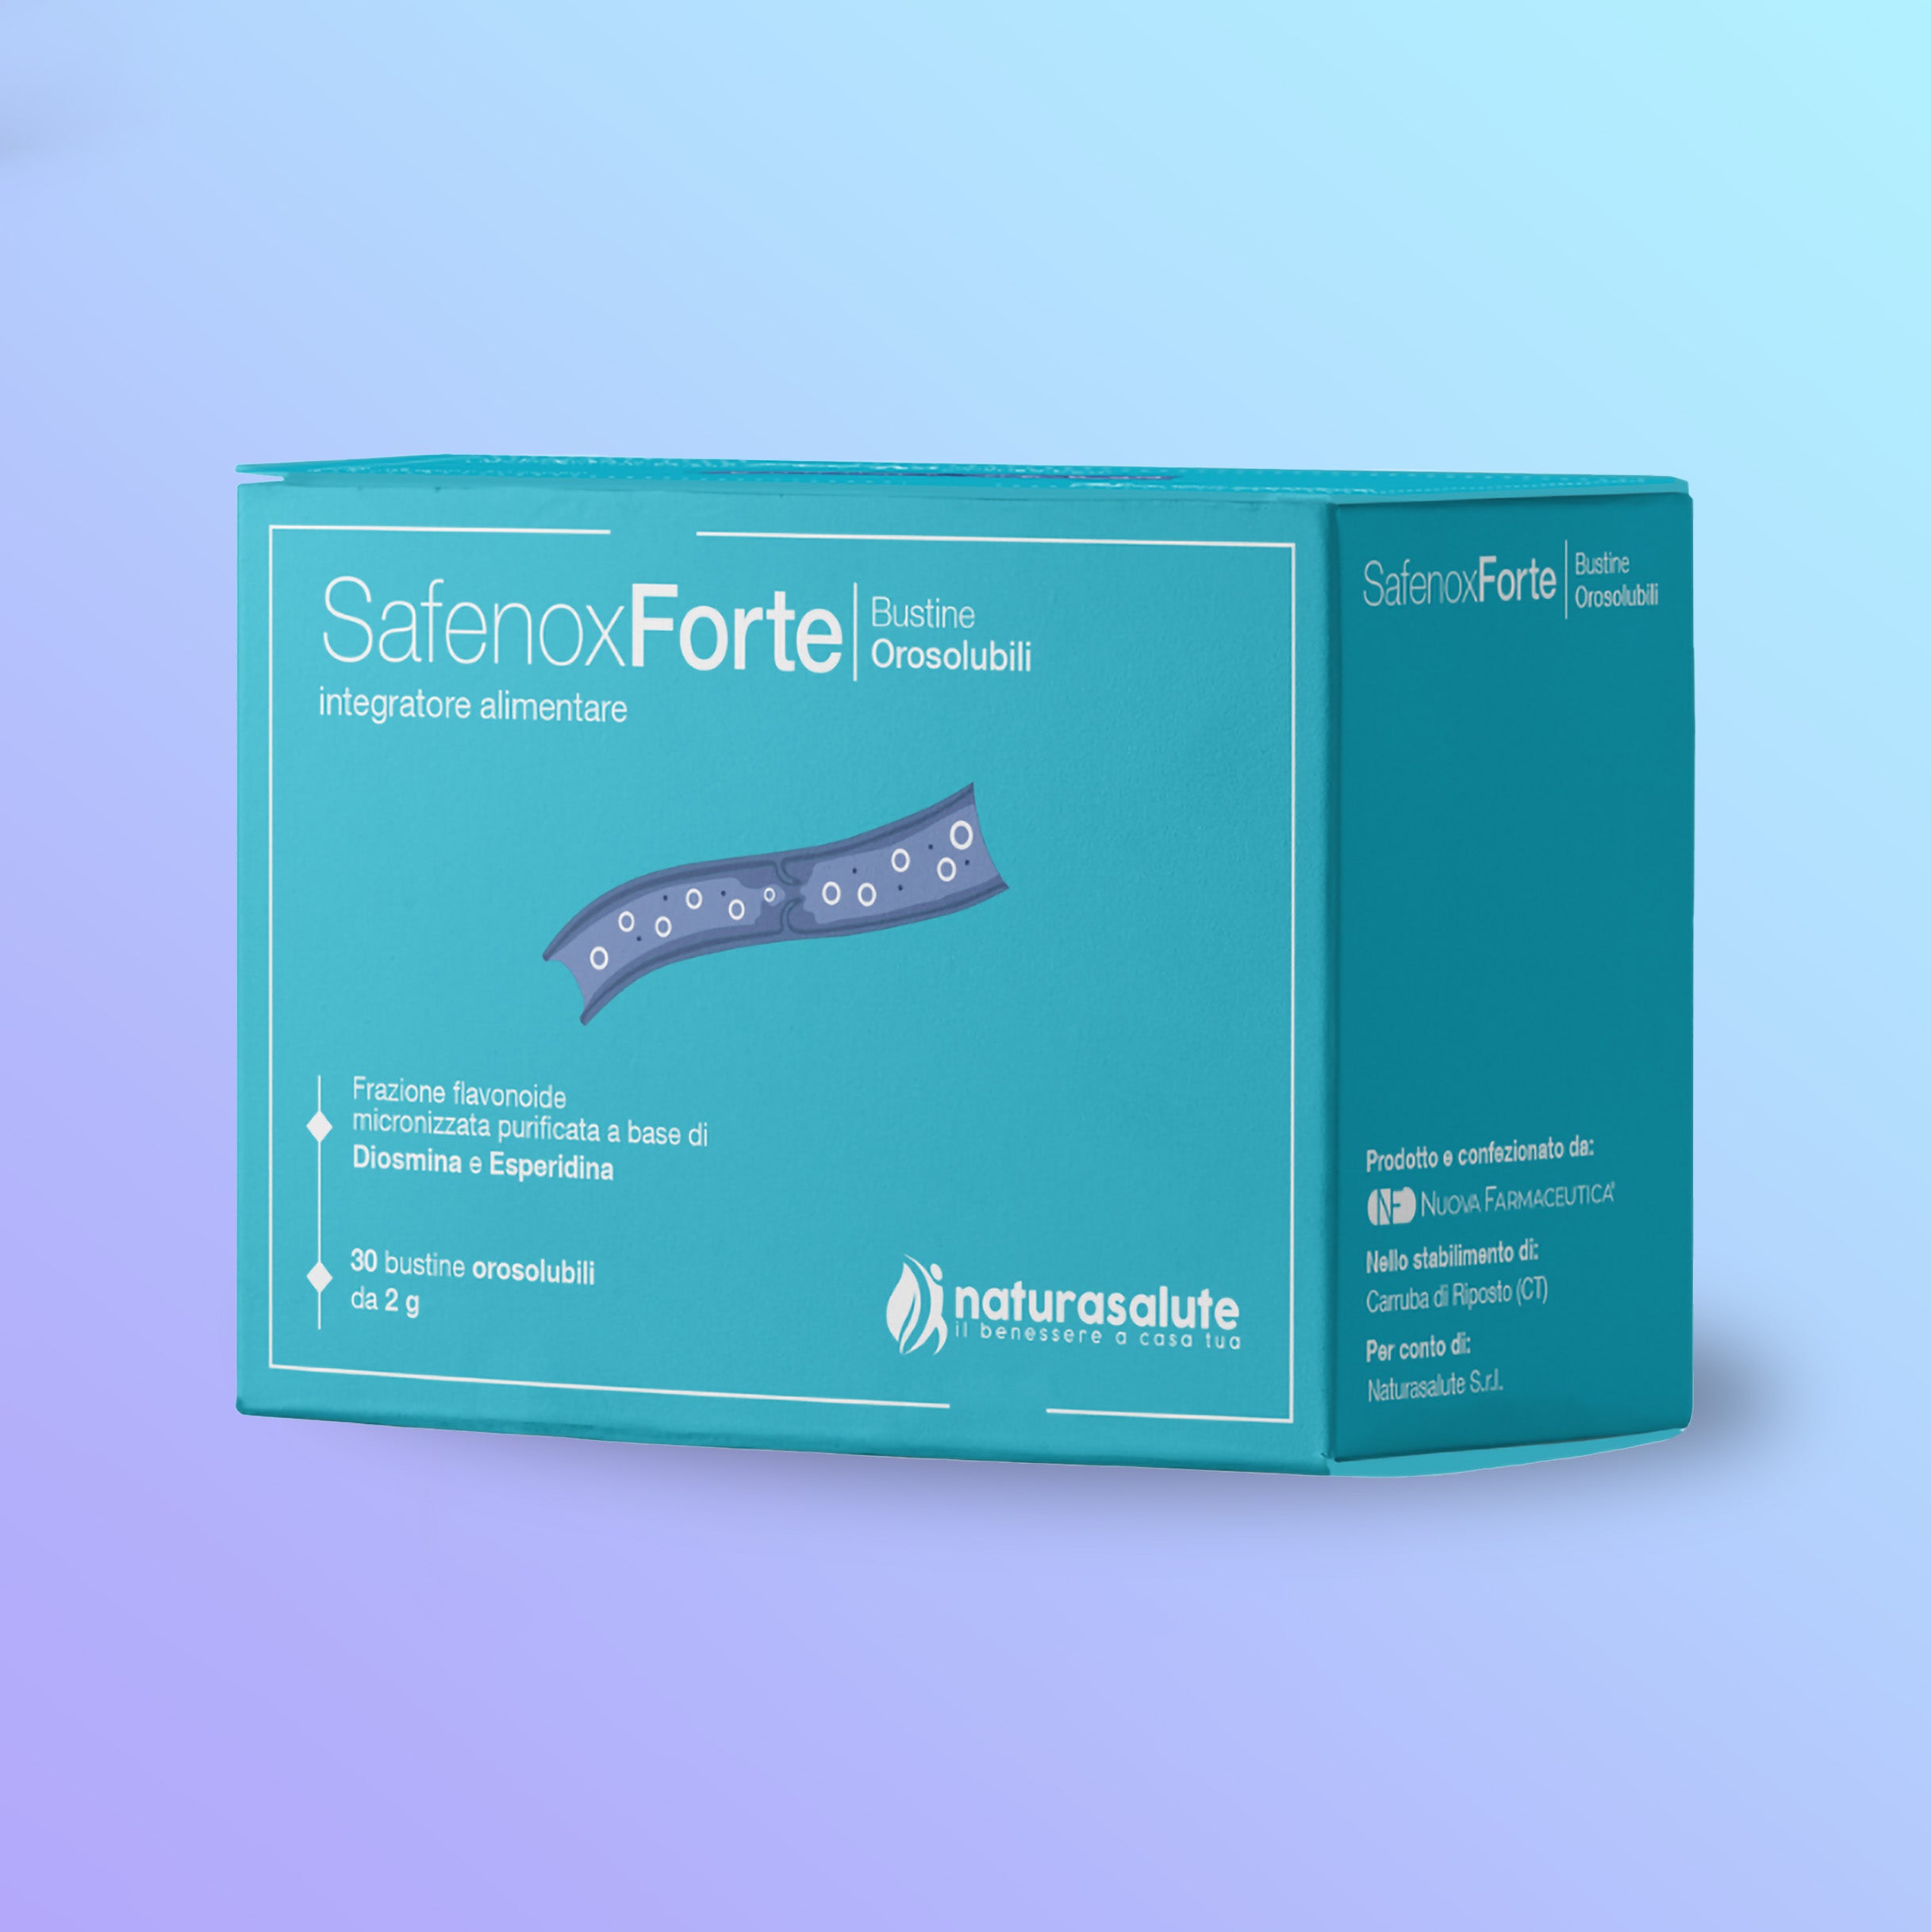 Safenox Forte (Bustine)